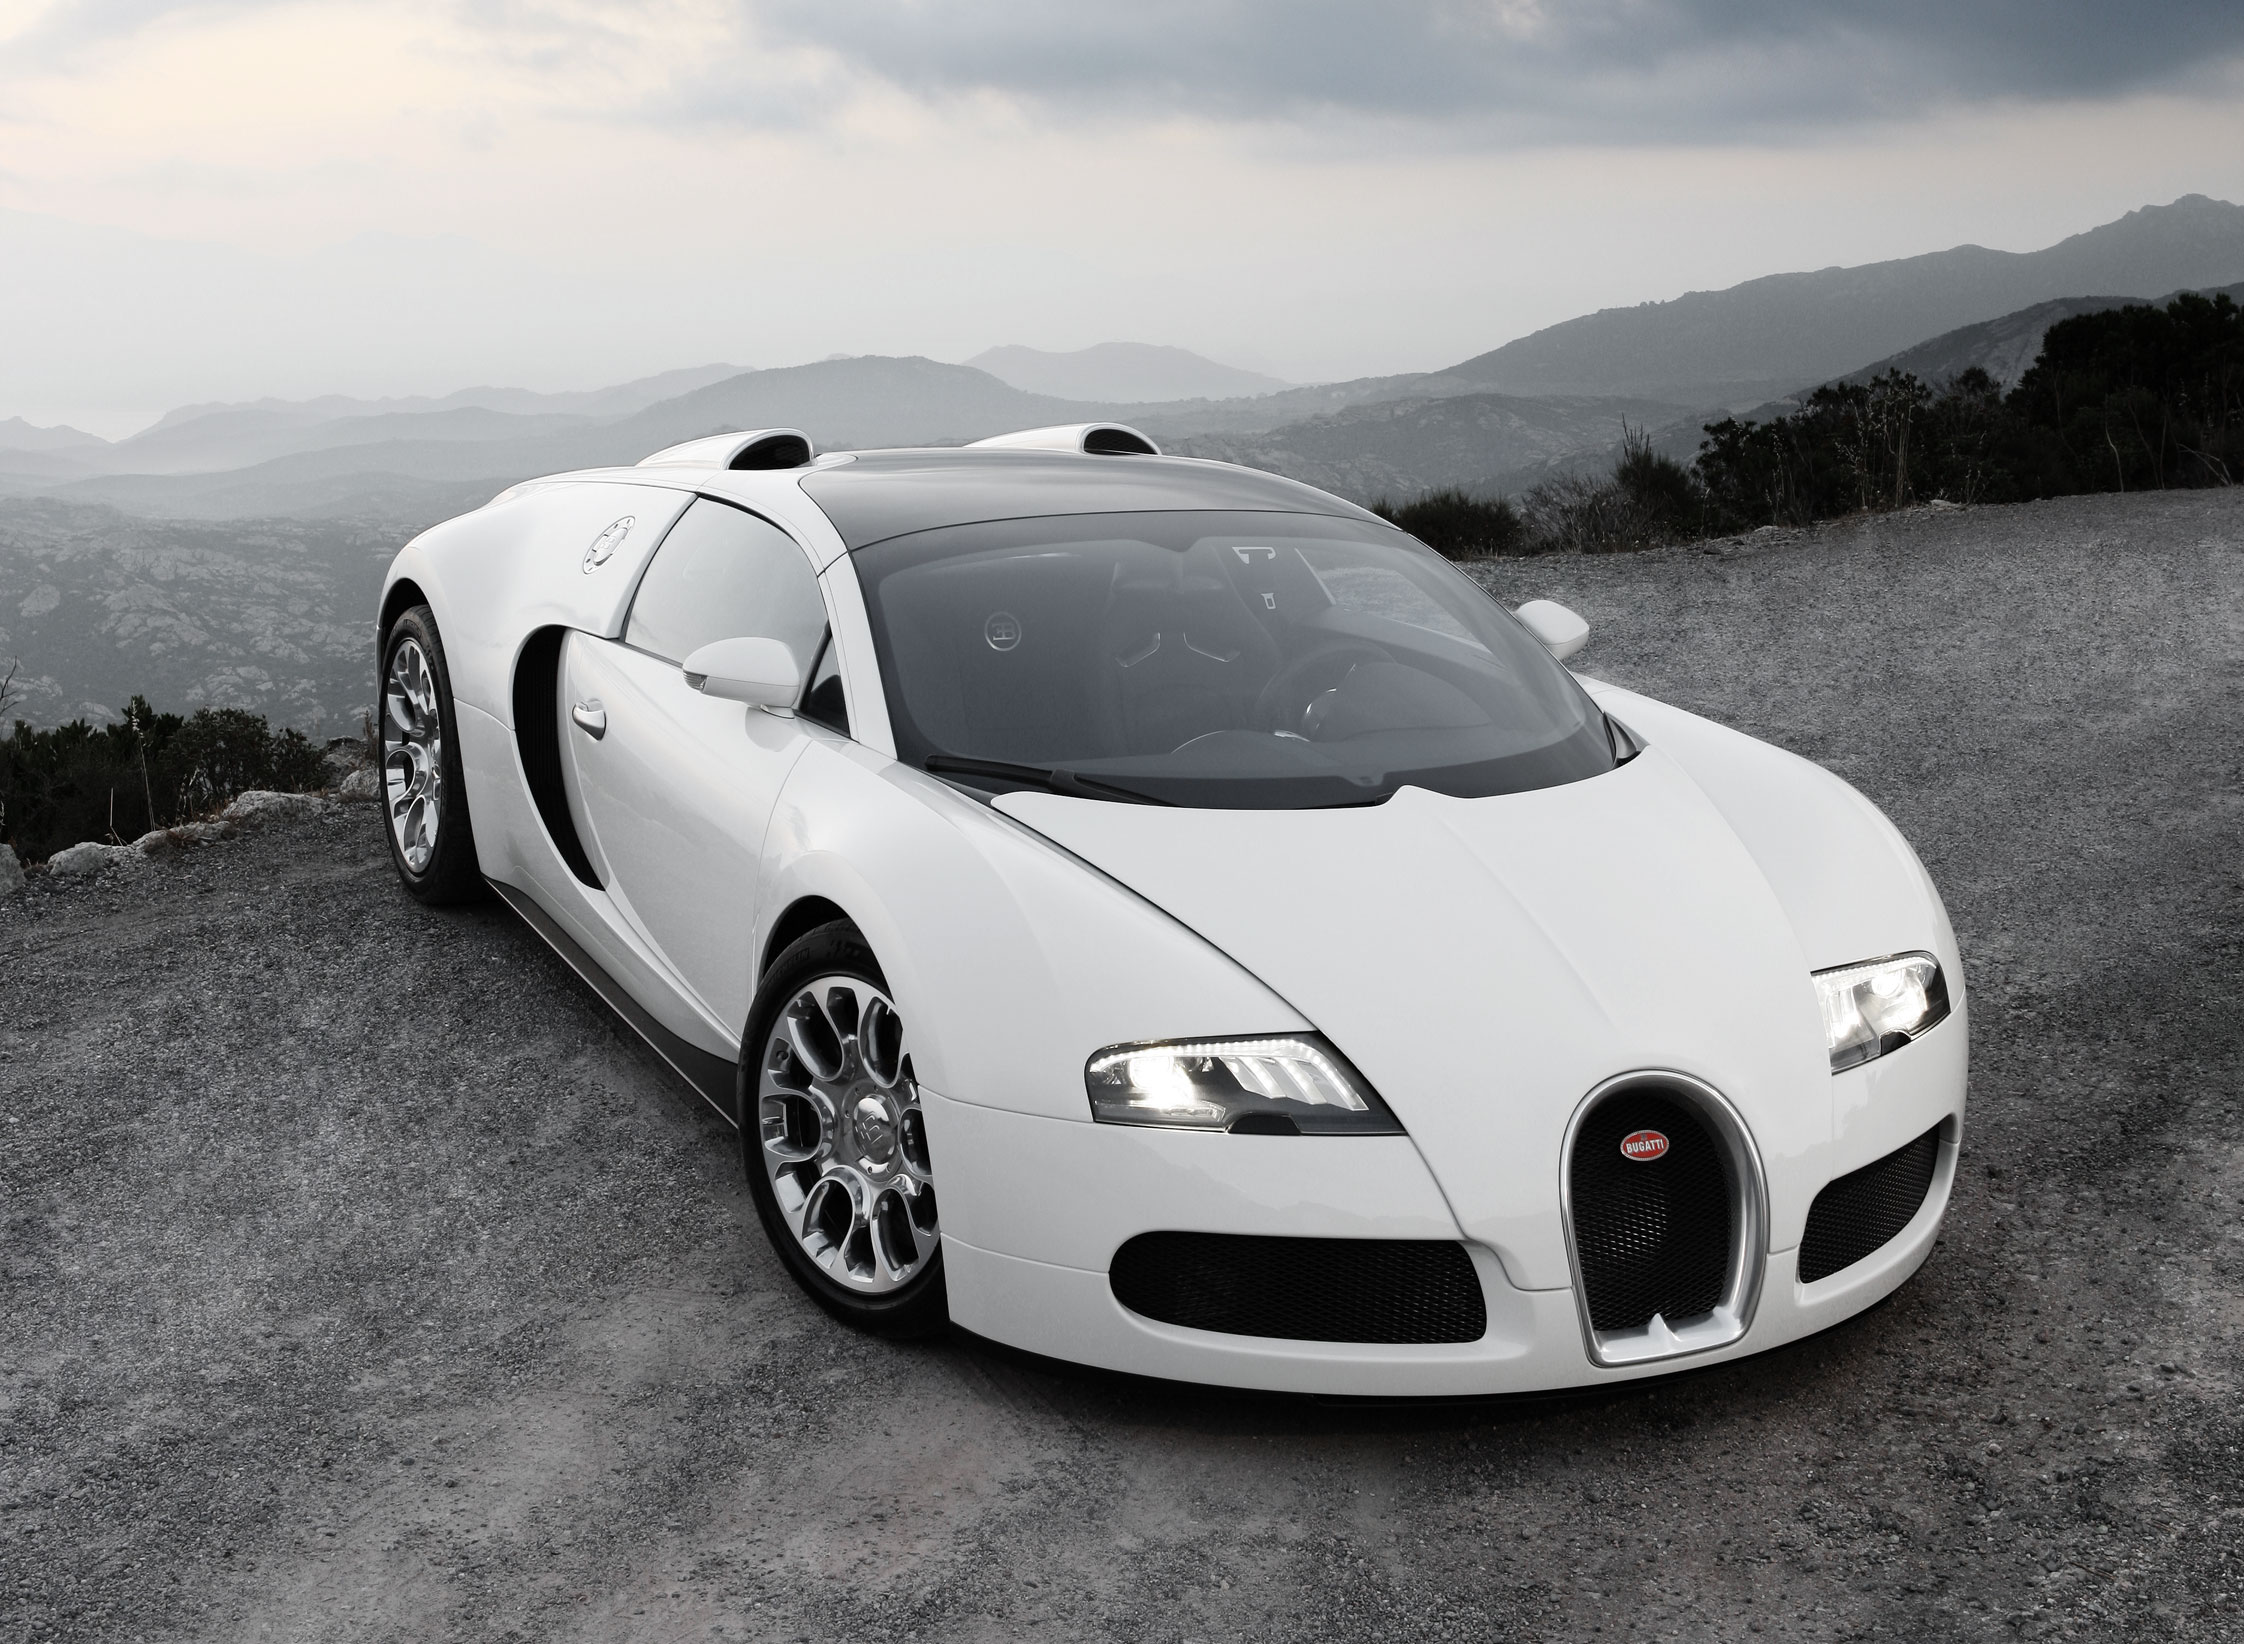 A Luxurious Masterpiece: The 2009 Bugatti Veyron 16 4 Grand Sport